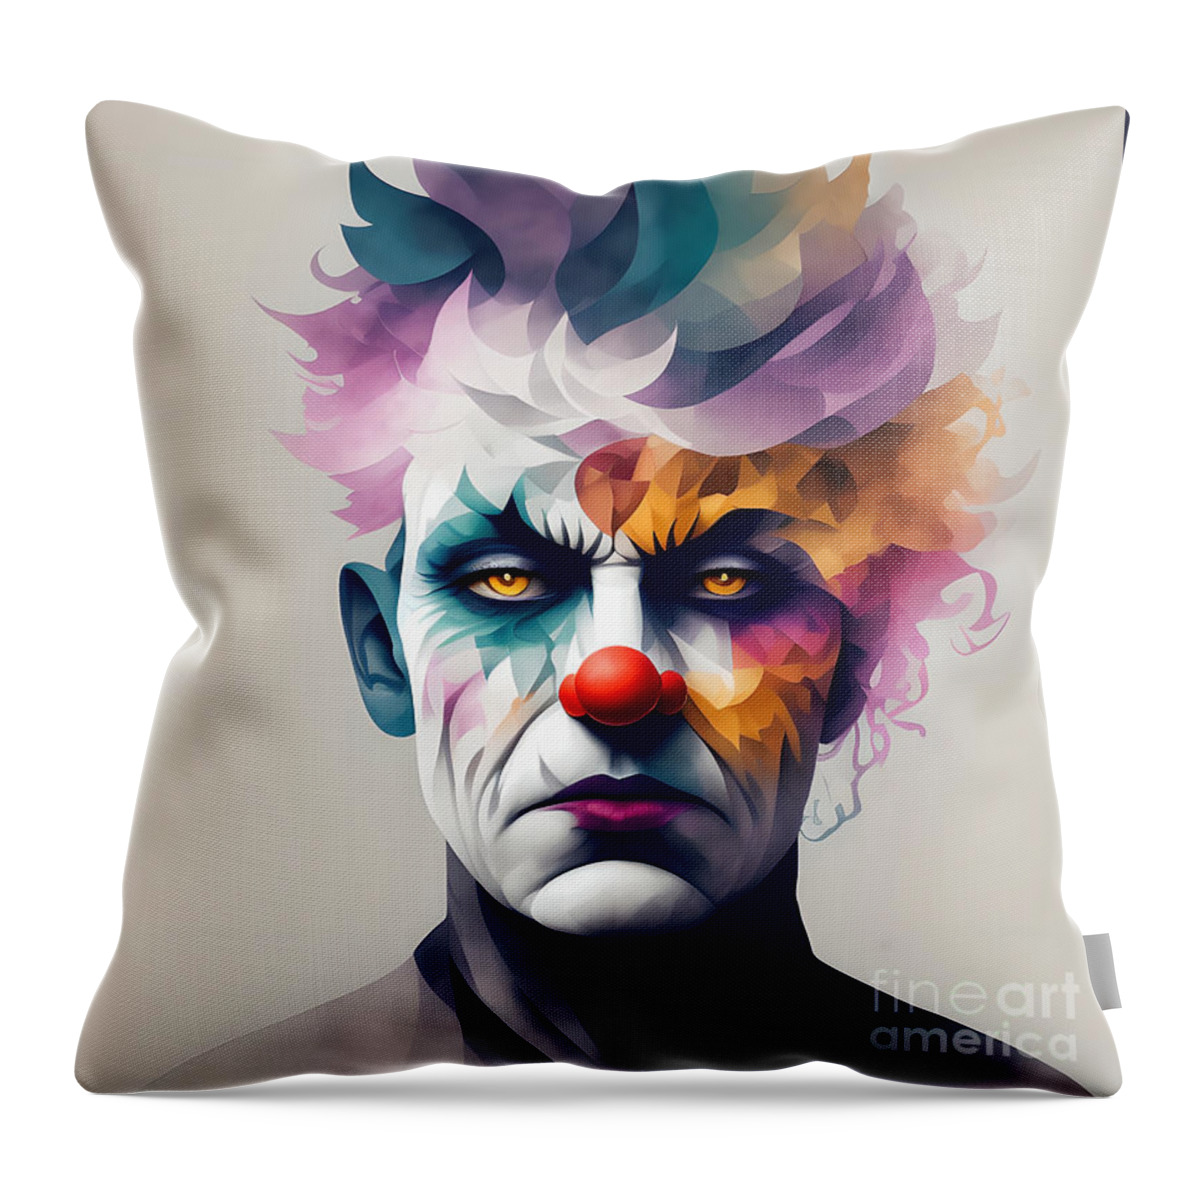 Clown Throw Pillow featuring the digital art Clown Abstract Portrait - 7 by Philip Preston